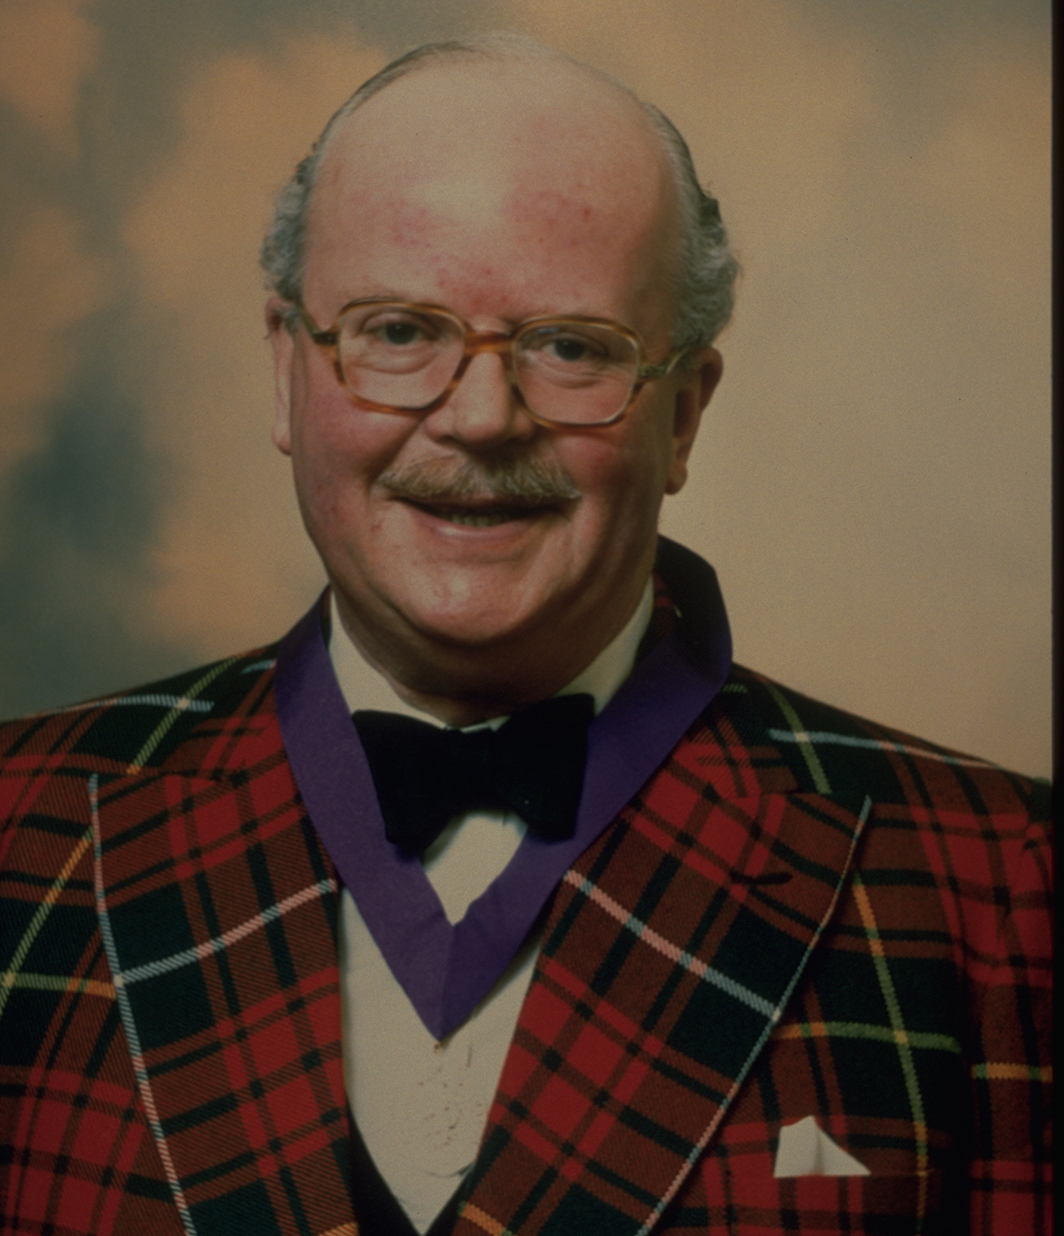 head and shoulders of man in tartan jacket smiling at camera